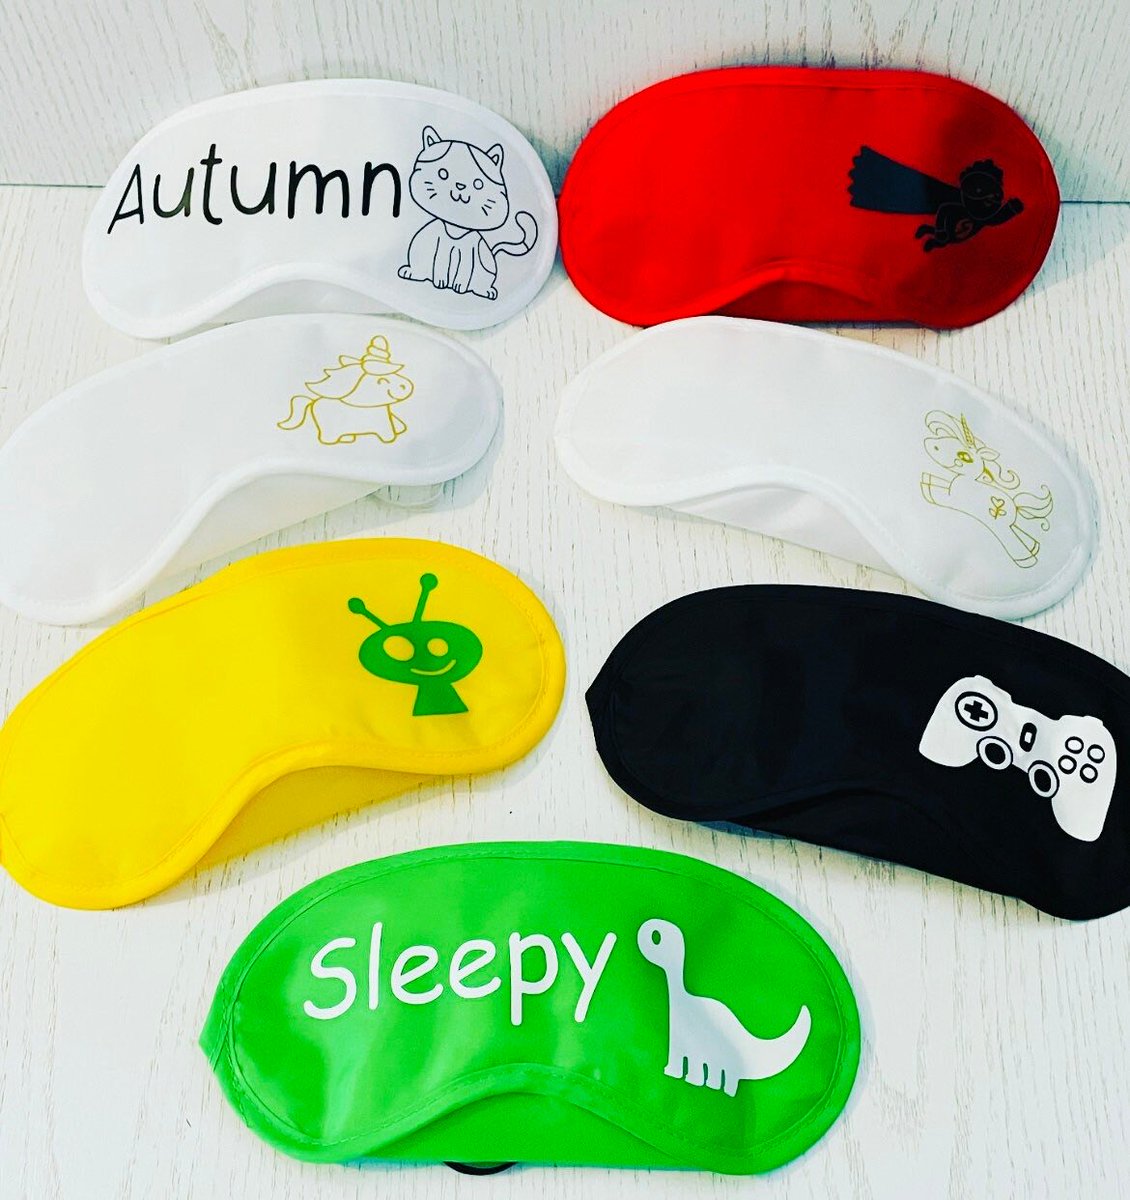 Lovely personalised sleep masks for children. Themed eye masks, sleepover gifts. #childsleepmask #sleepovergifts #personalisedgifts #eyemask #saleonnow #etsy etsy.com/listing/118124…